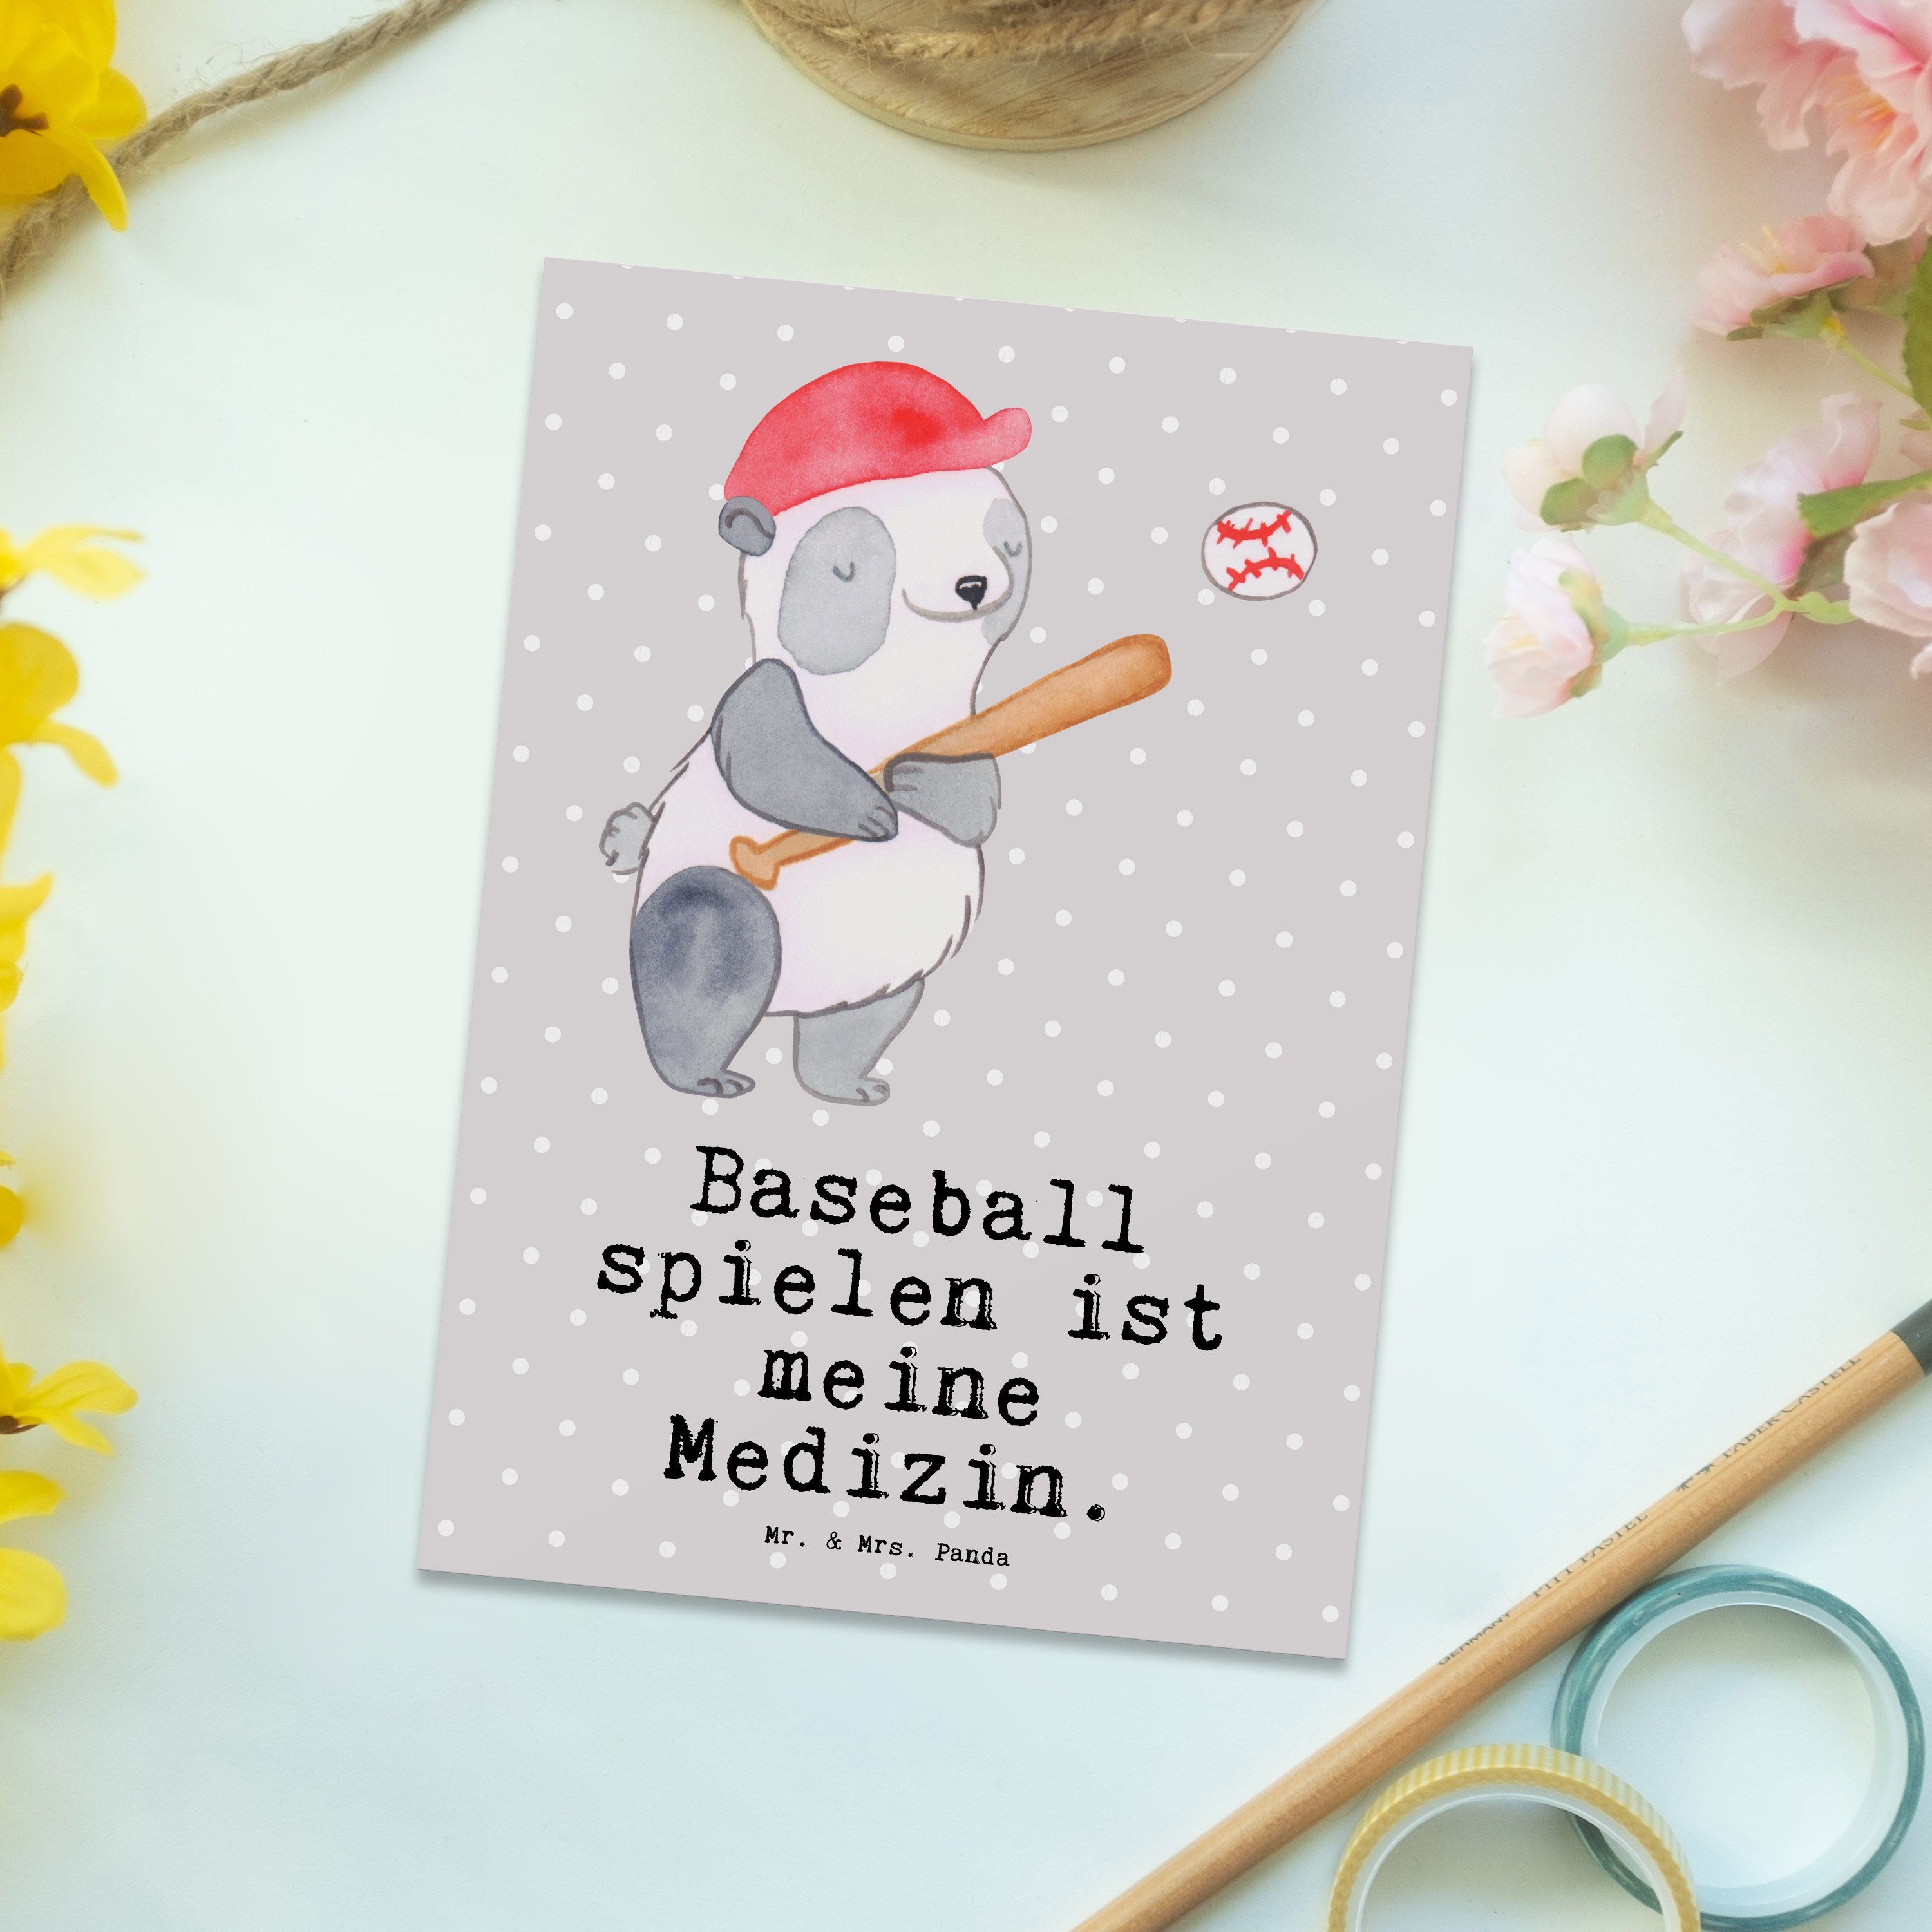 Mr. & Mrs. Panda Panda spielen Medizin Einl Pastell Postkarte Geschenk, Baseball - Grau - Sport